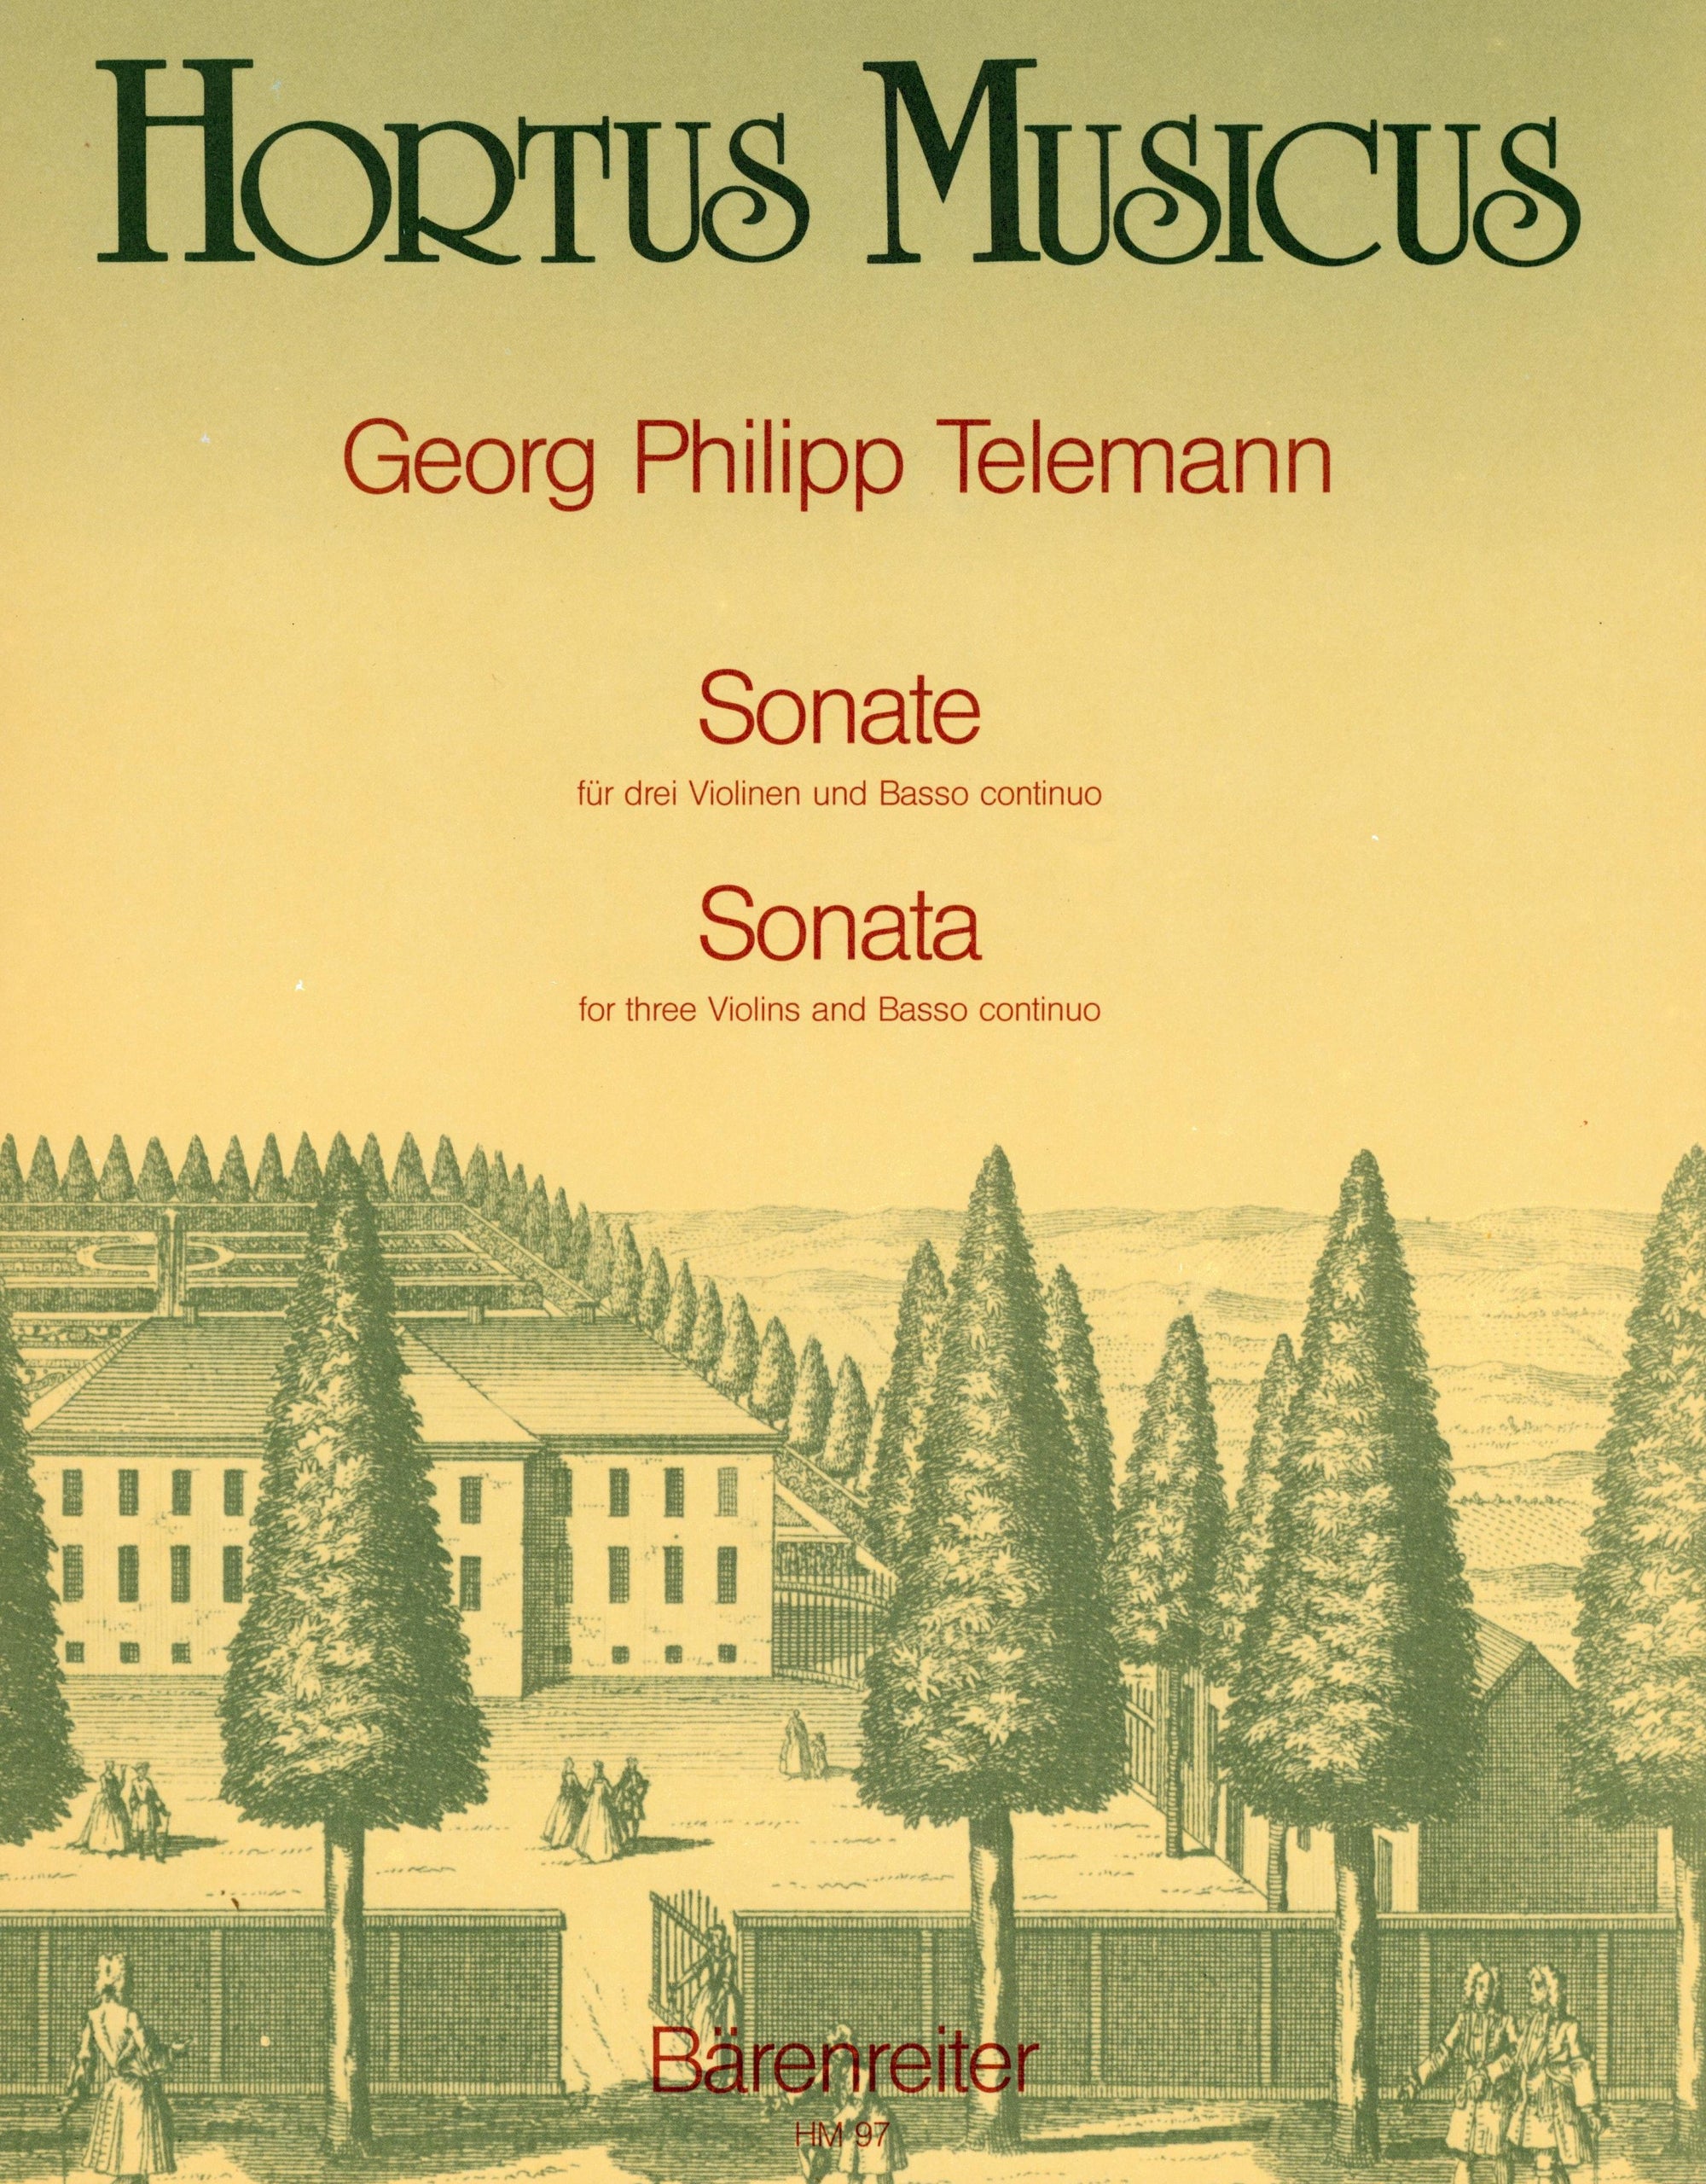 Telemann: Sonata for Three Violins and Basso continuo in B Major, TWV 43:B1